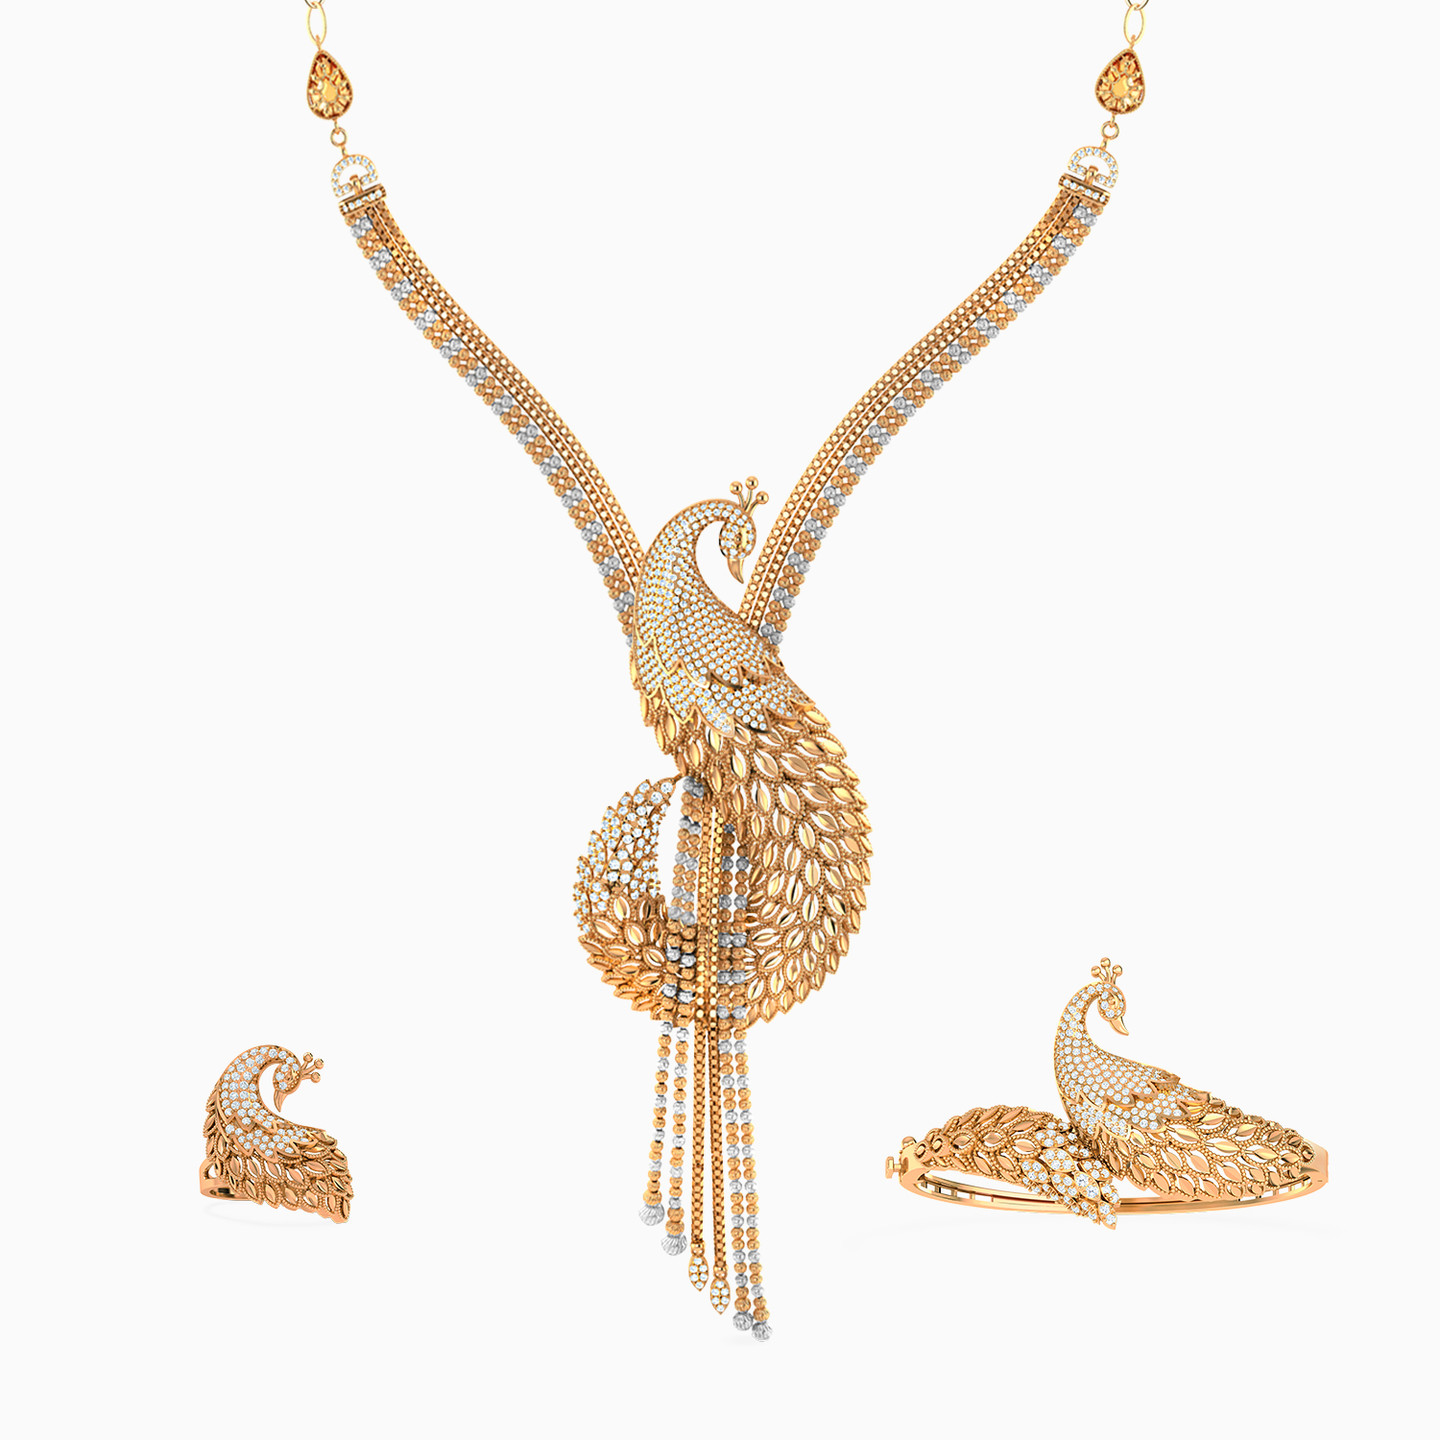 21K Gold Cubic Zirconia Jewelry Set - 3 Pieces